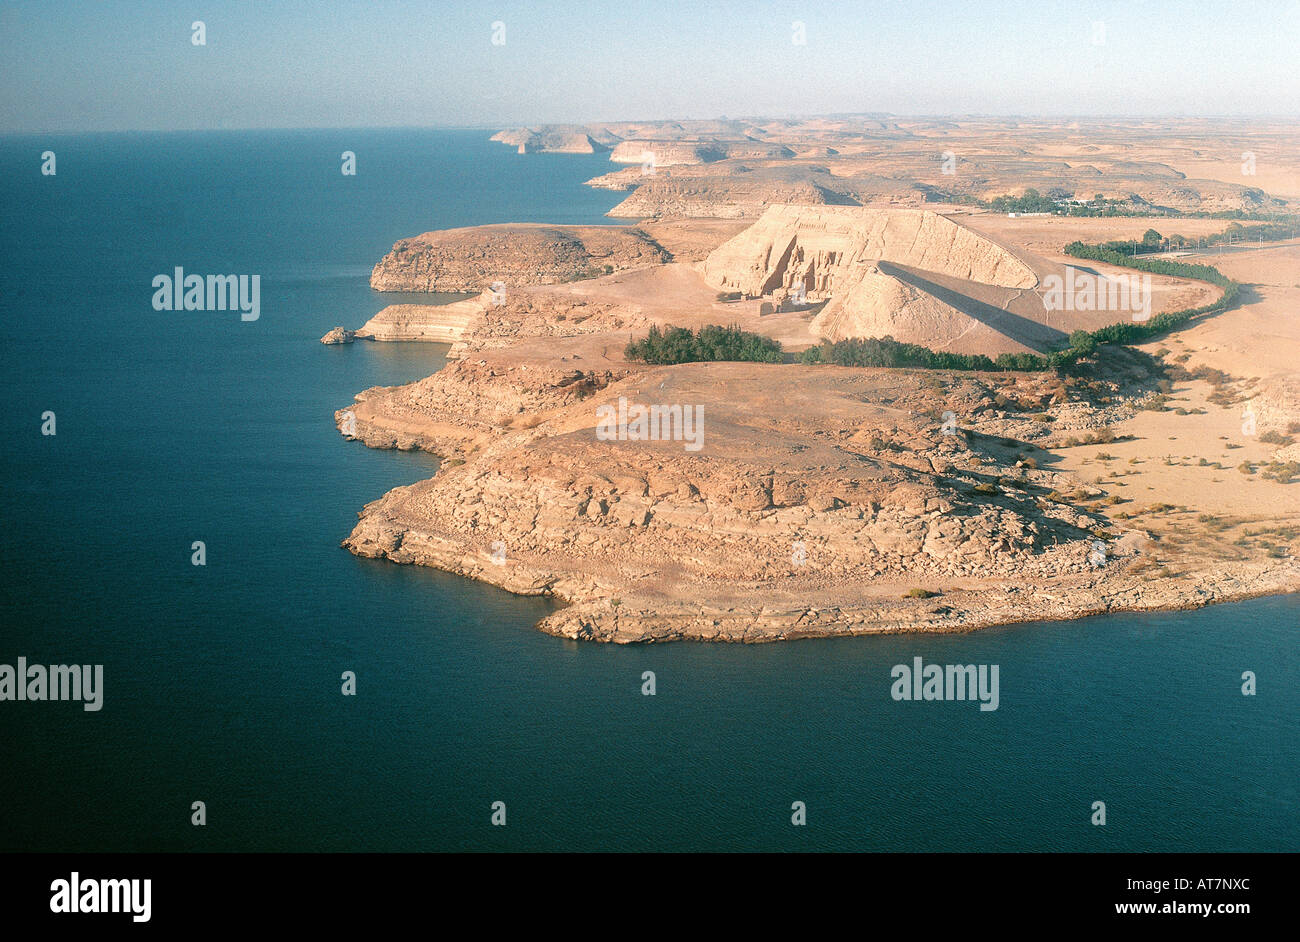 Aerial view of Abu Simbel Lake Nasser Egypt Stock Photo